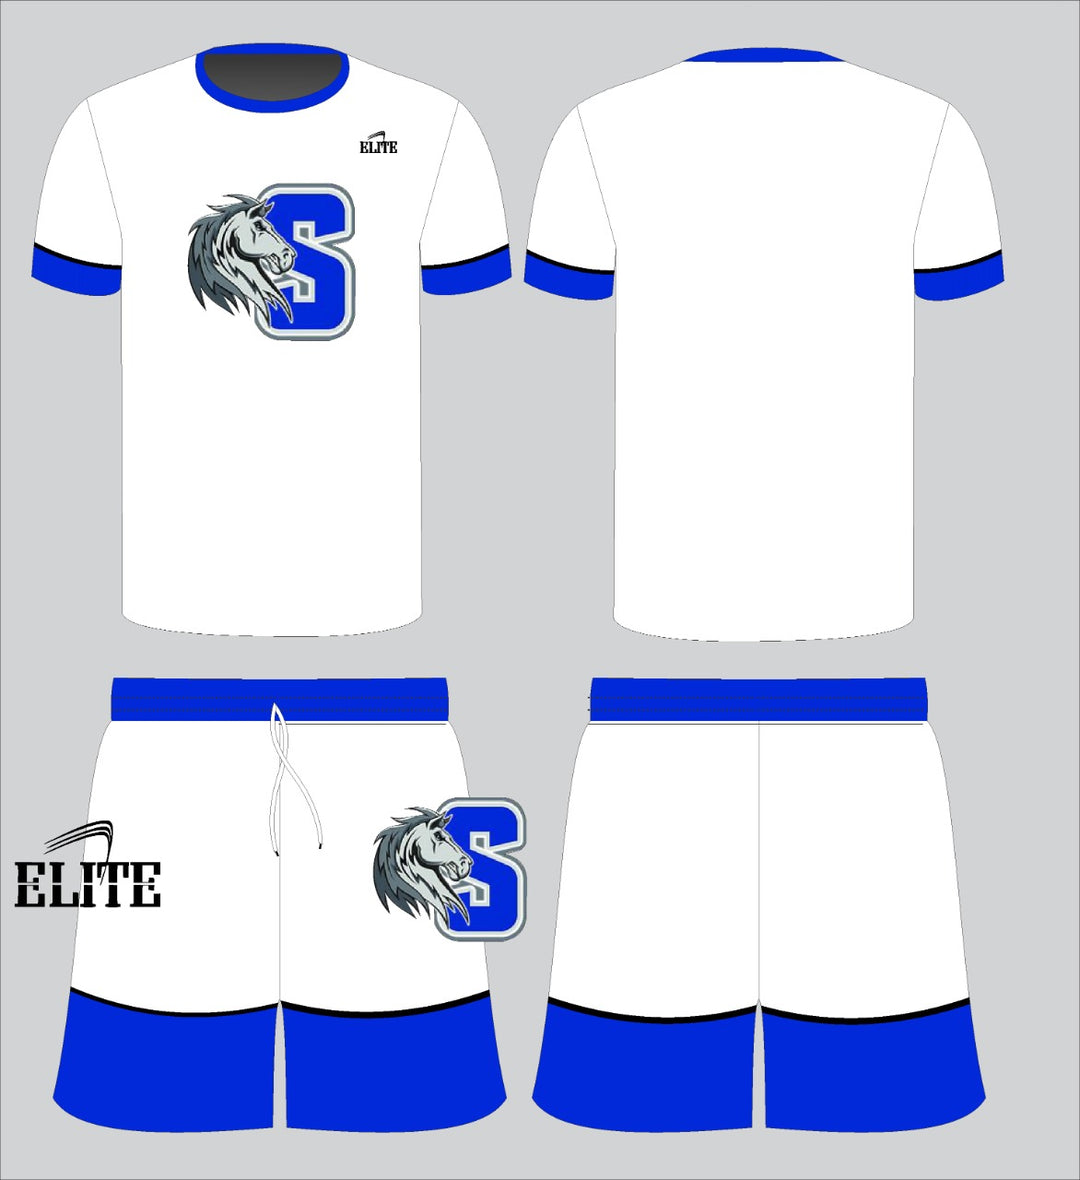 Scotlandville Middle - White - Blue - Workout Set